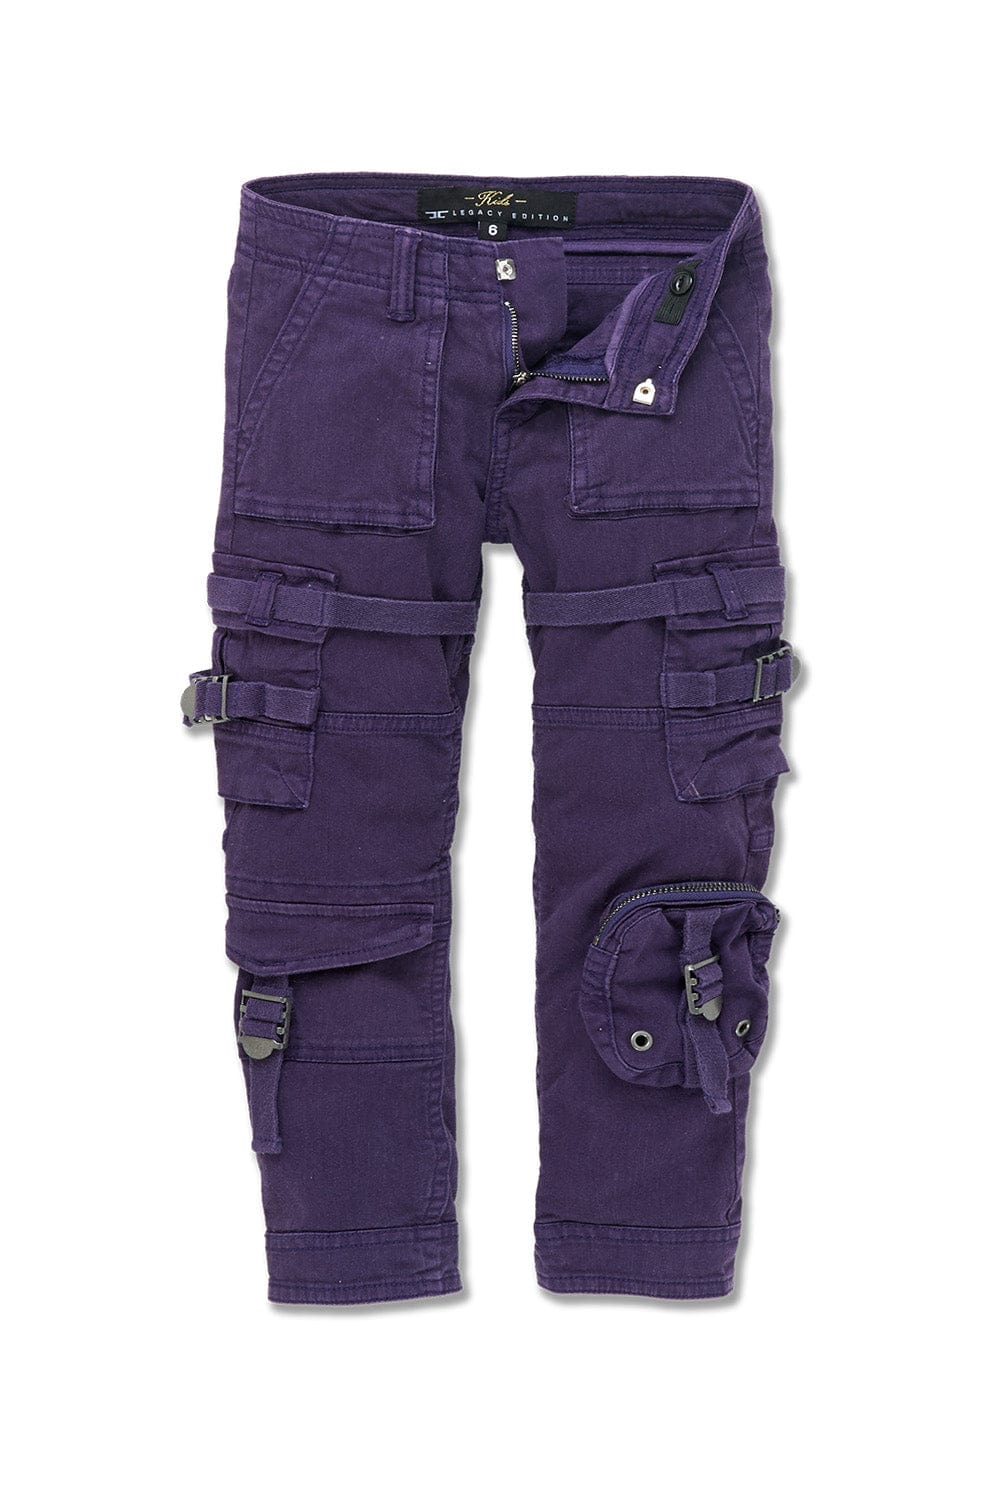 JC Kids Kids Cairo Cargo Pants Purple / 2